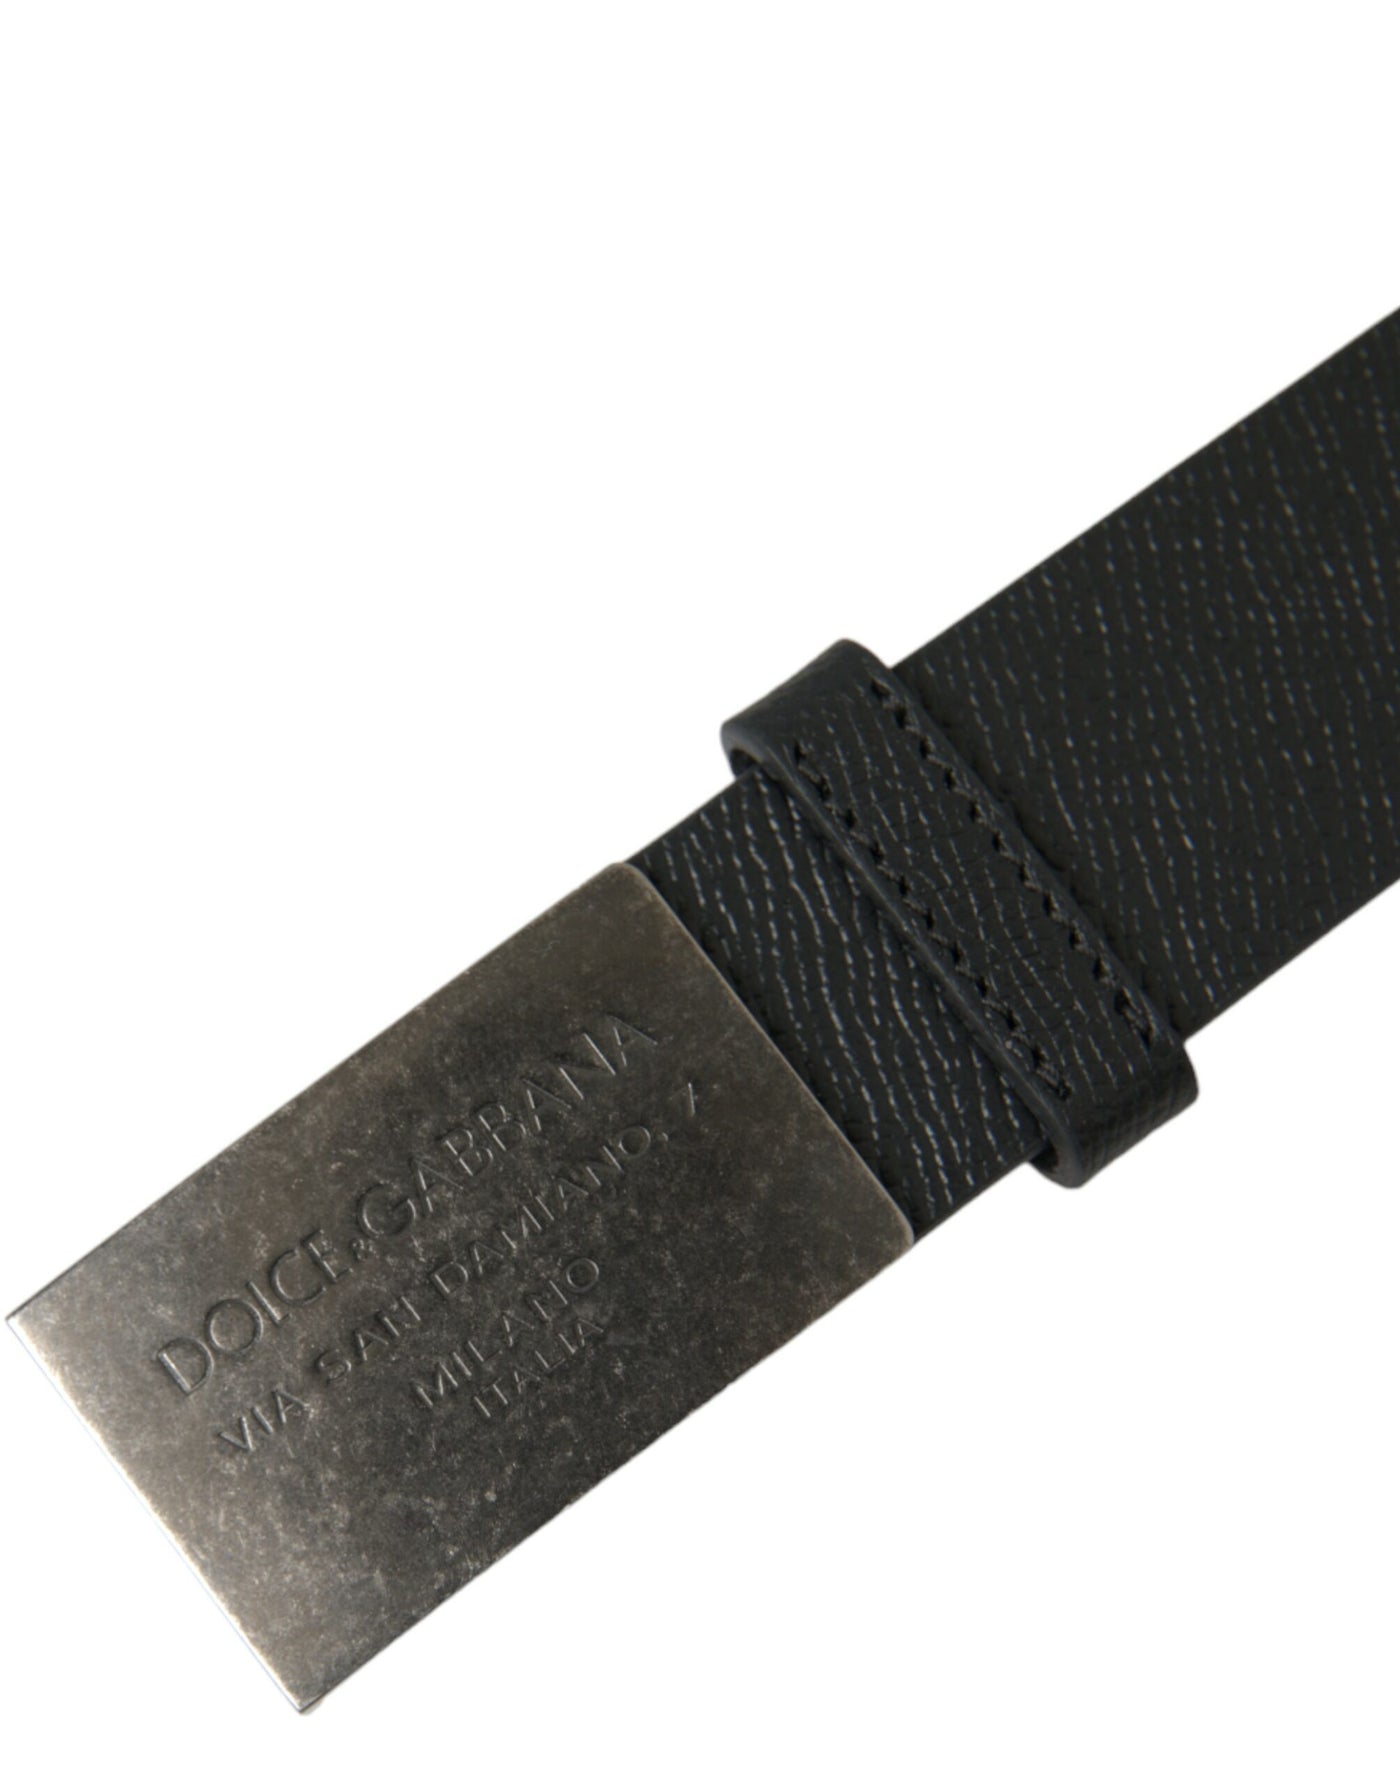 Dolce & Gabbana Black Leather Rectangle Metal Buckle Belt